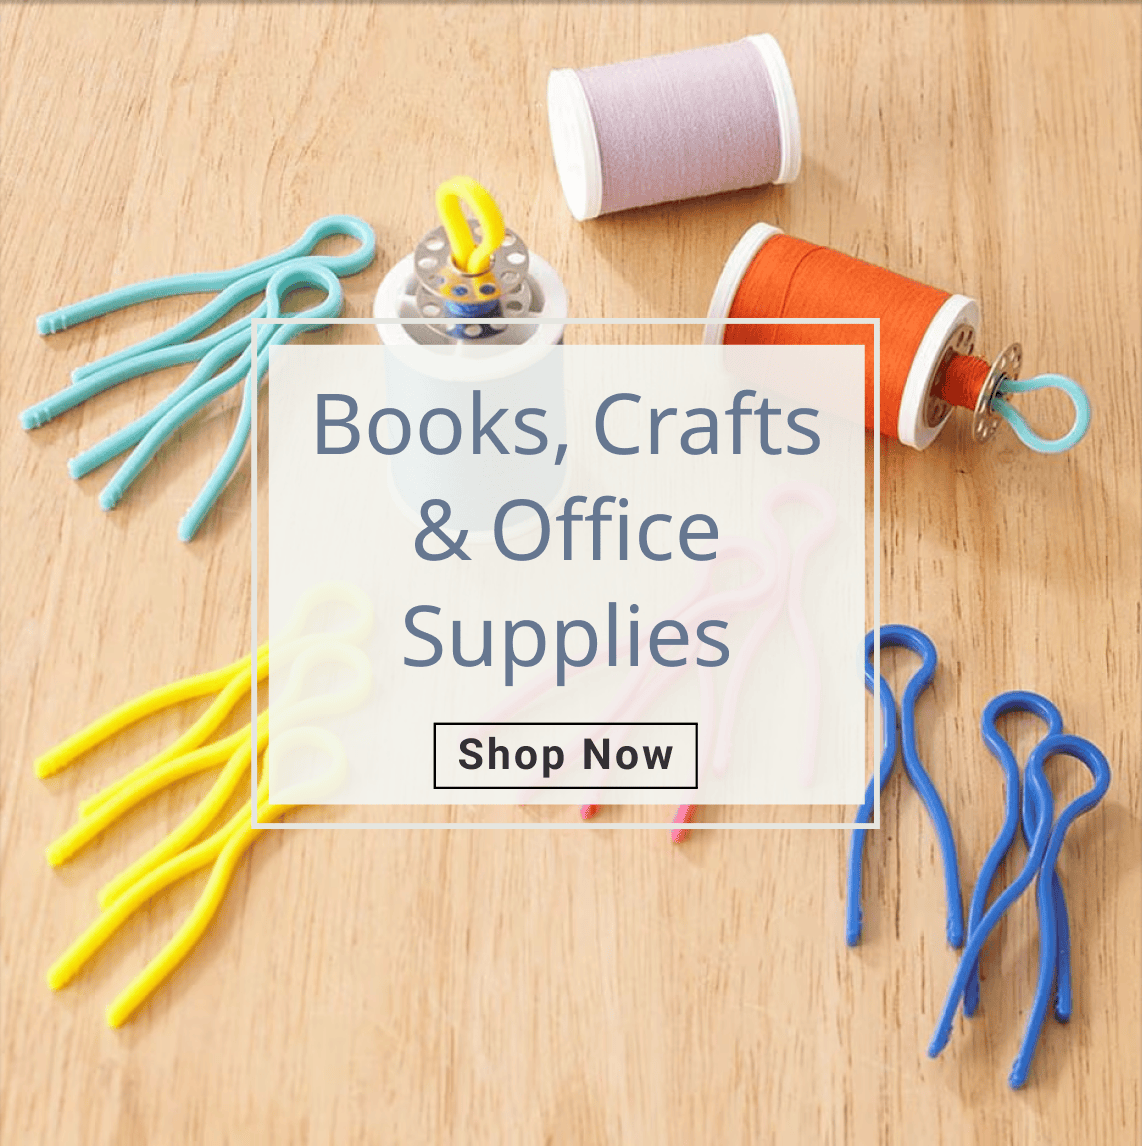 Books & Crafts & Office Supplies